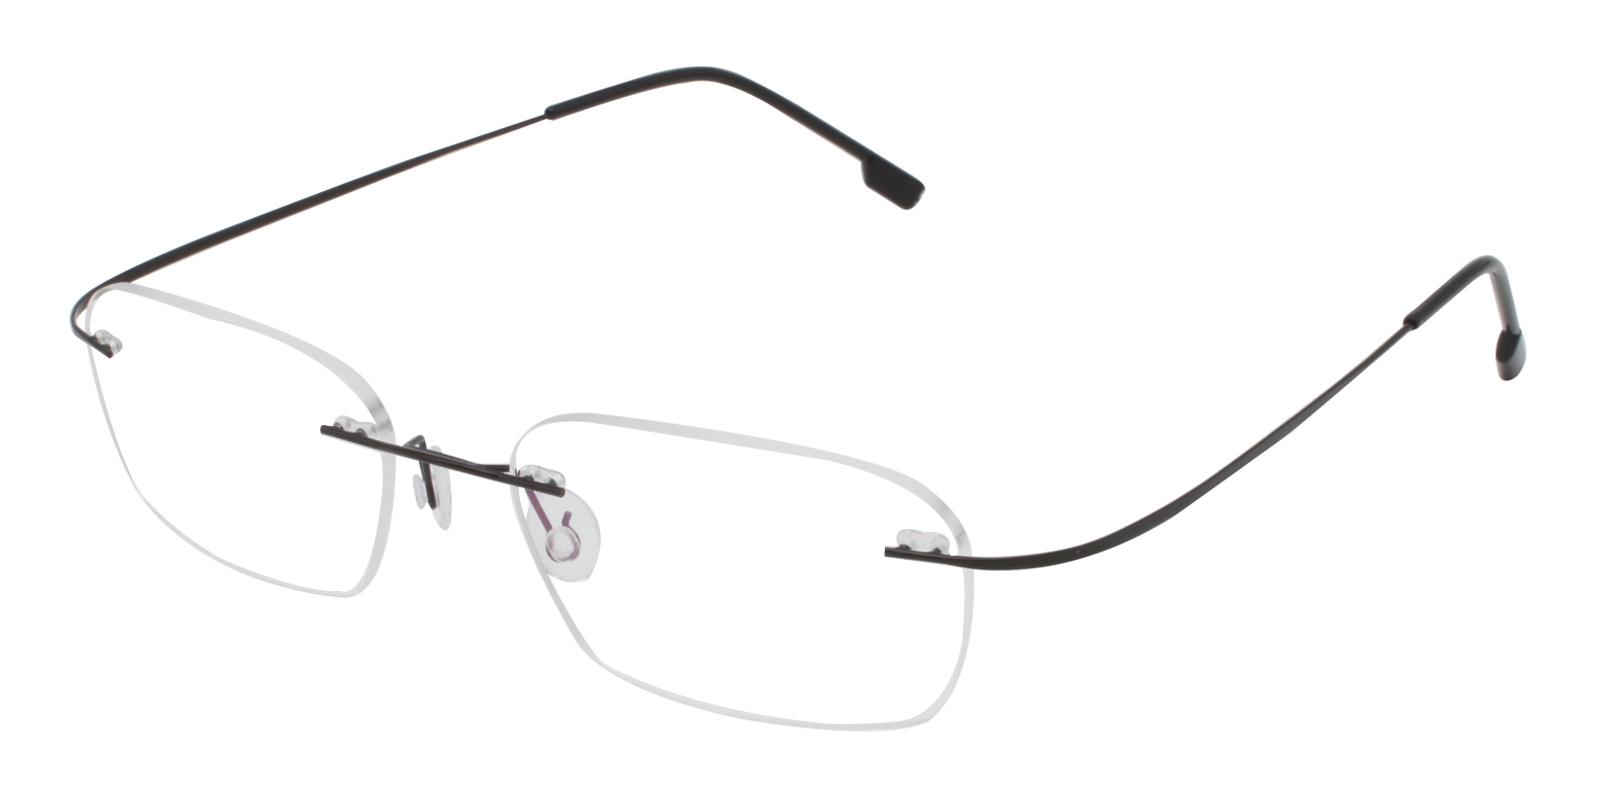 Elijah Black Metal Eyeglasses , NosePads Frames from ABBE Glasses